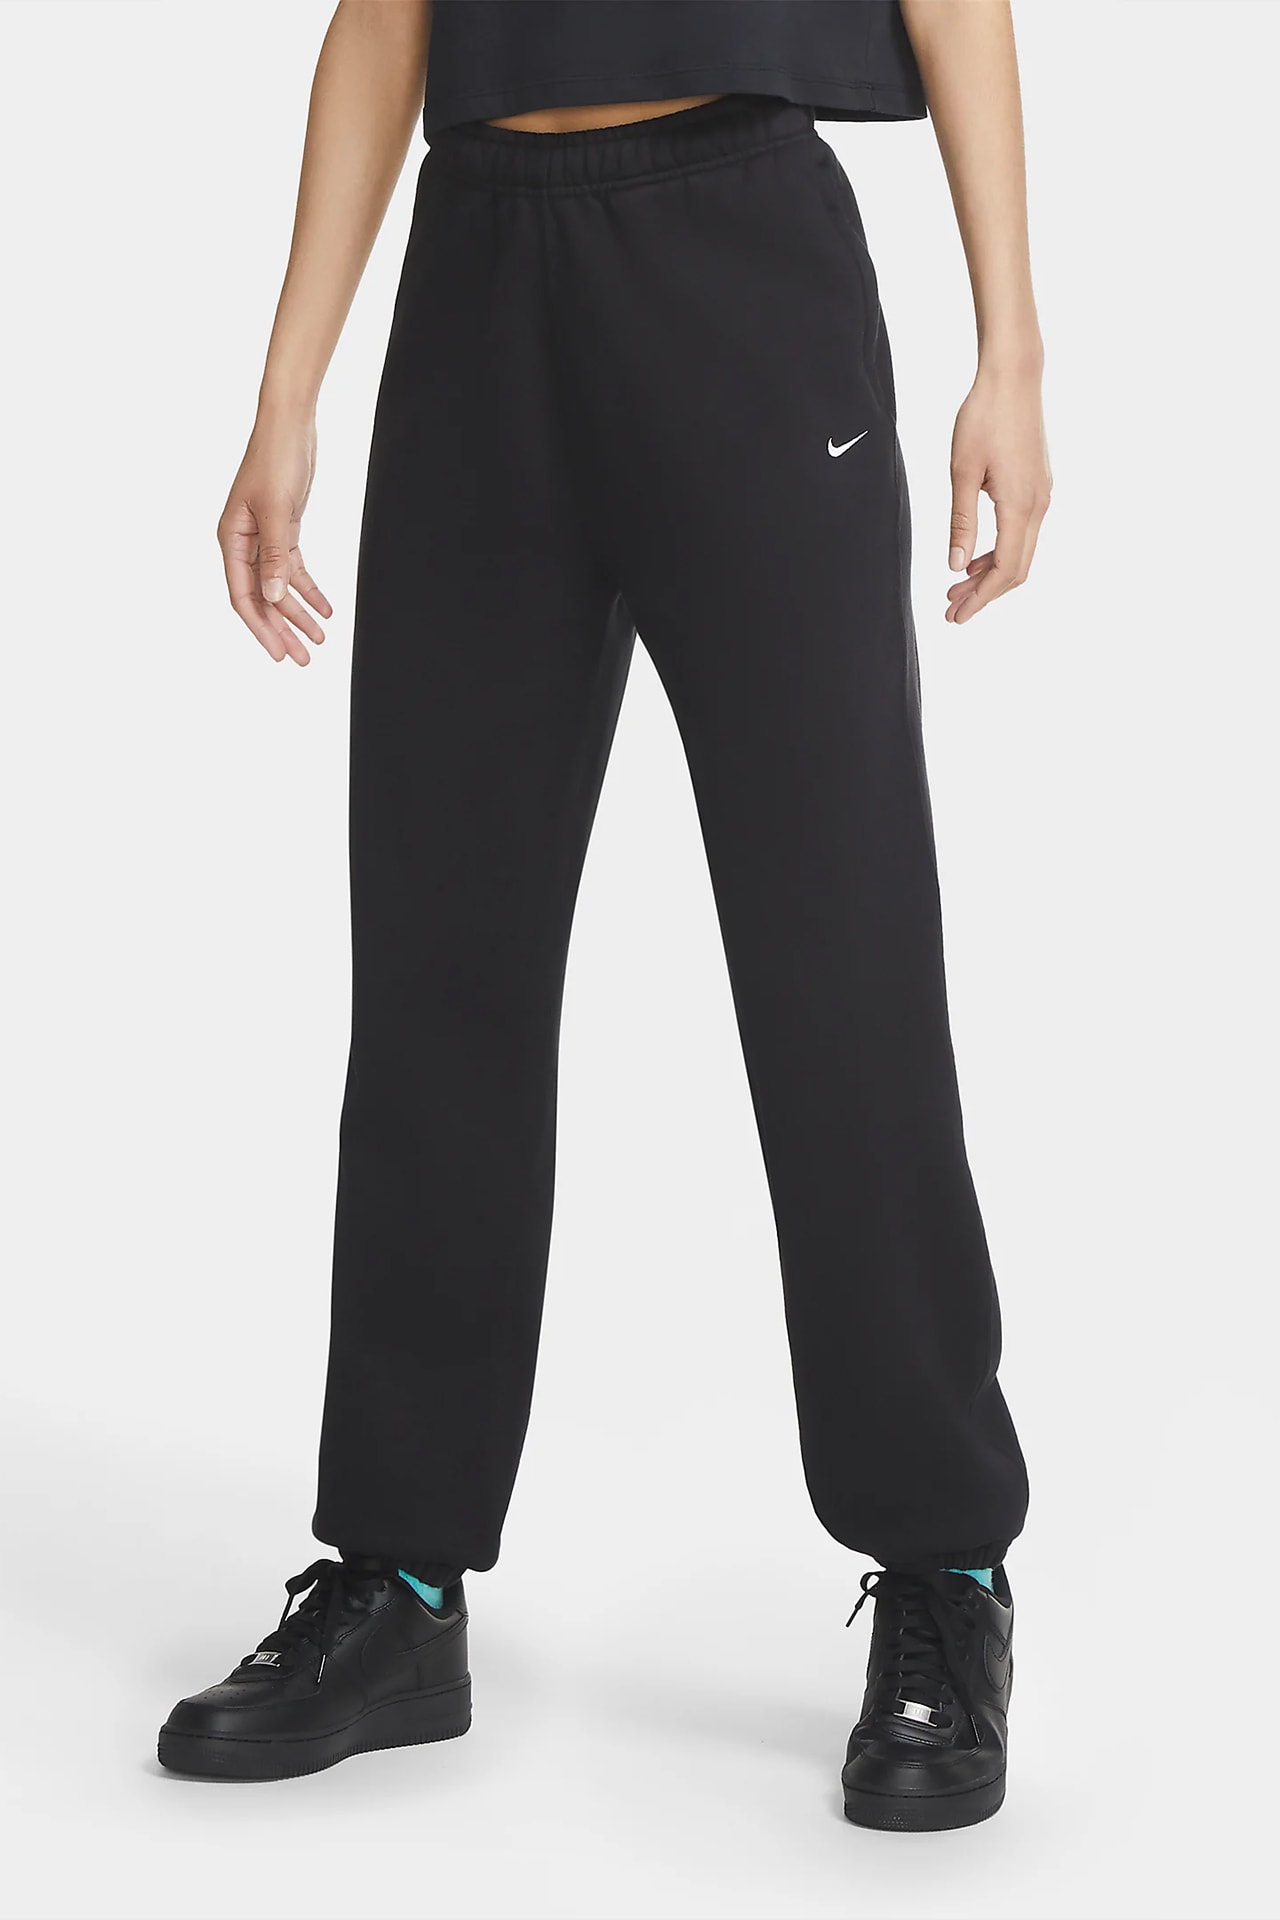 Reebok Identity Fleece Joggers Womens Athletic Pants X Small Black